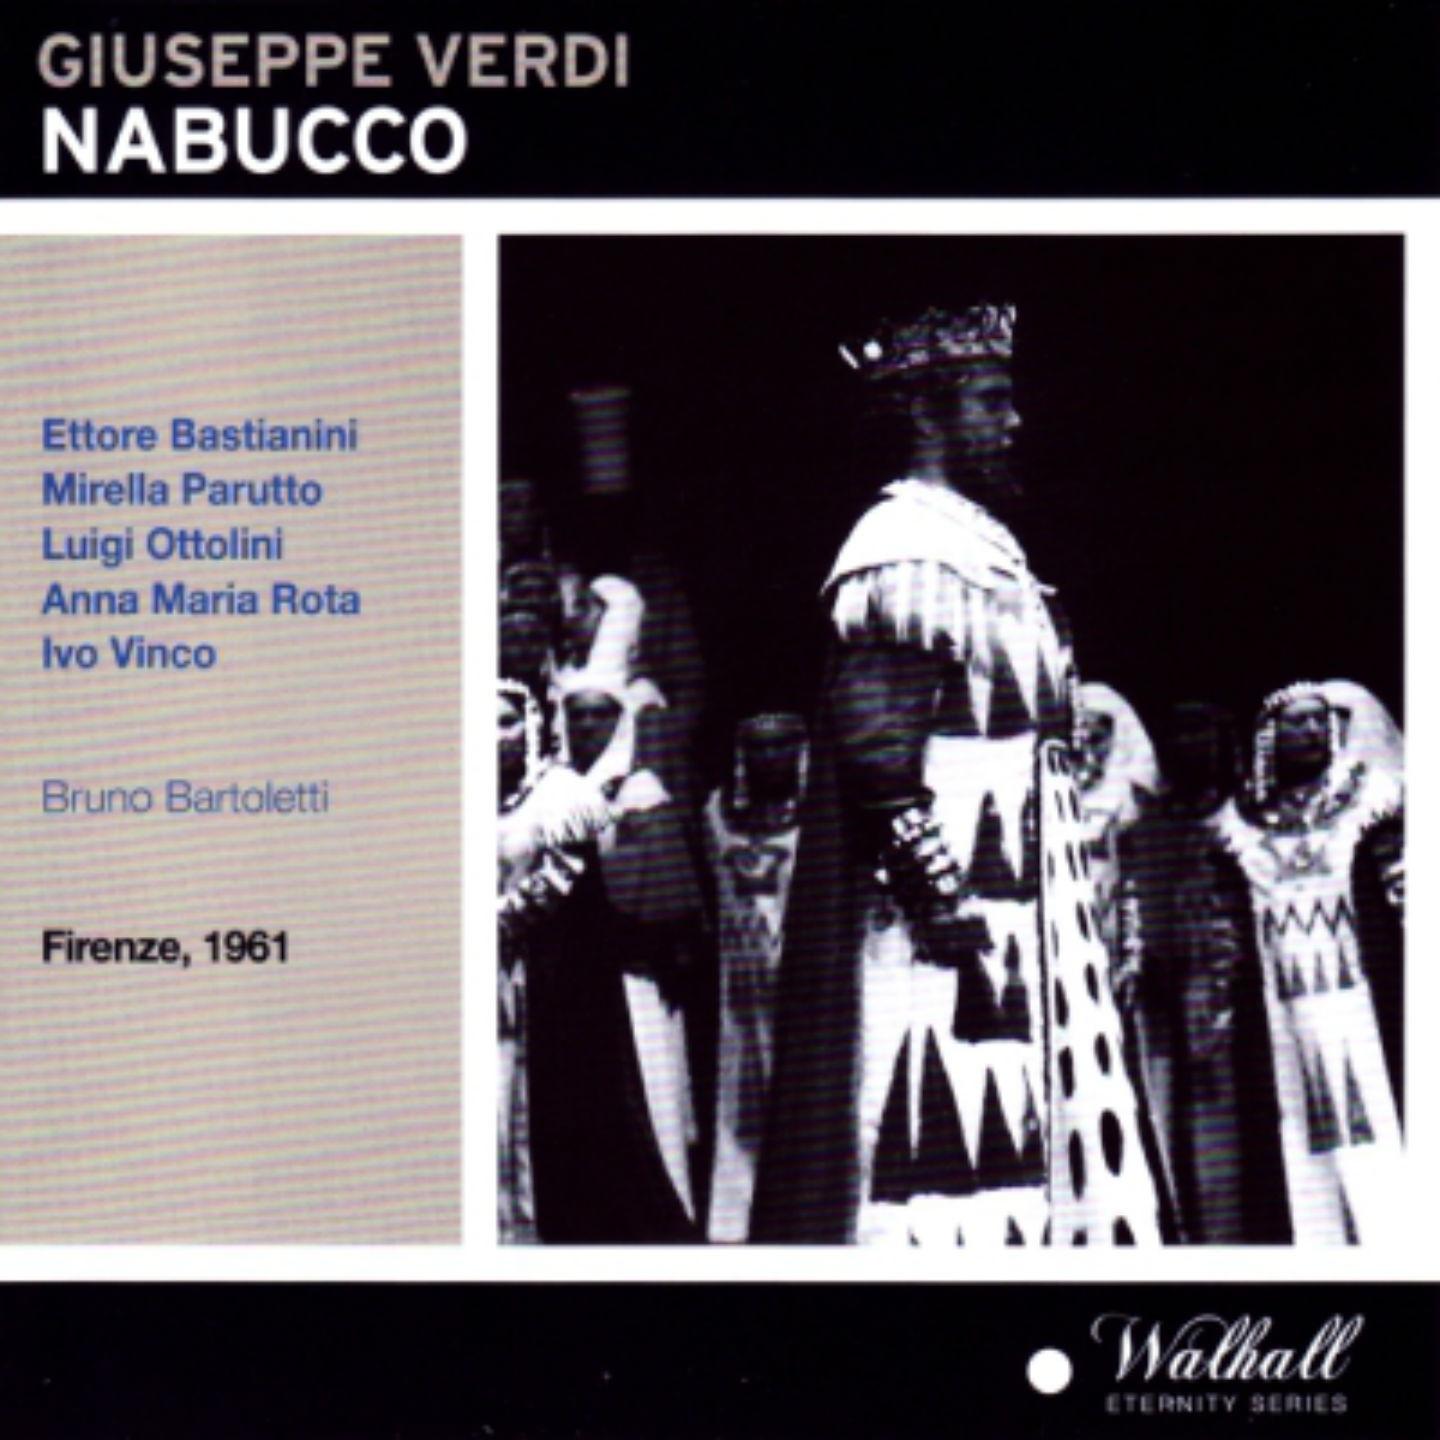 Nabucco: Act I "Gerusalemme" - Come notte a sol fulgente